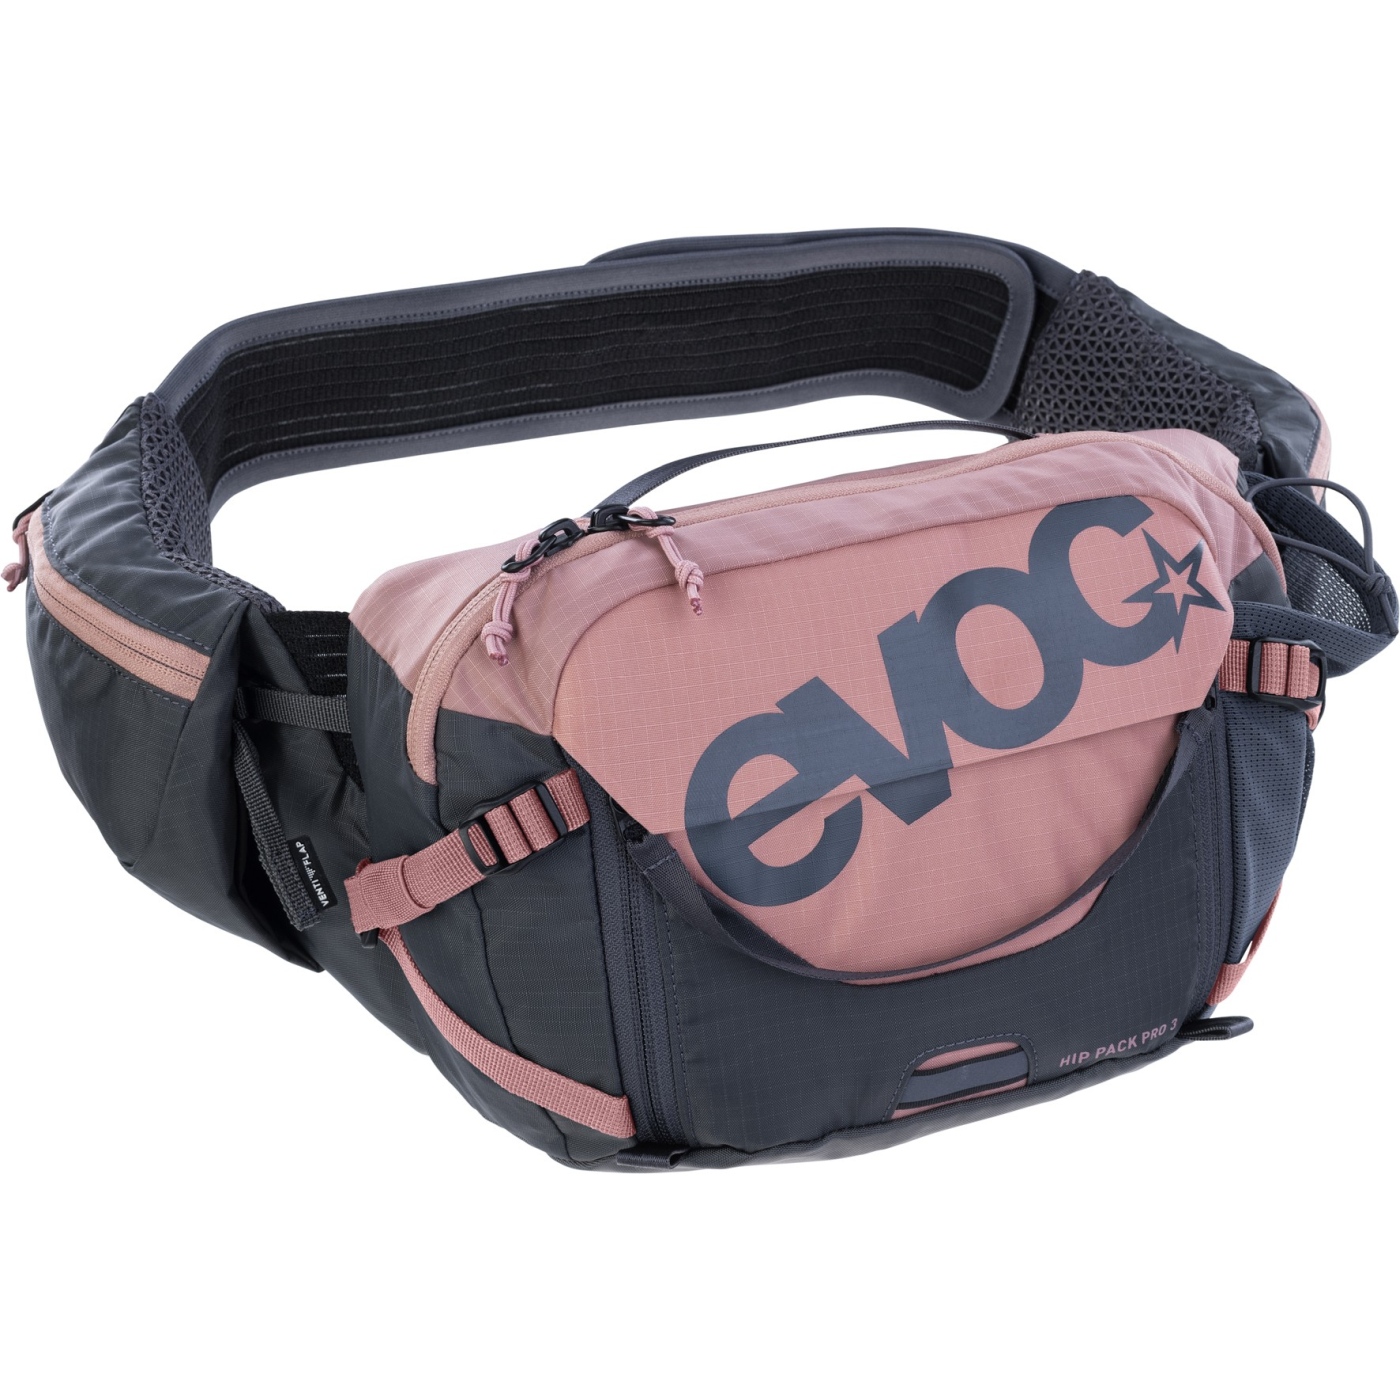 Productfoto van EVOC Hip Pack Pro Heuptas - 3 L - Dusty Pink - Carbon Grey